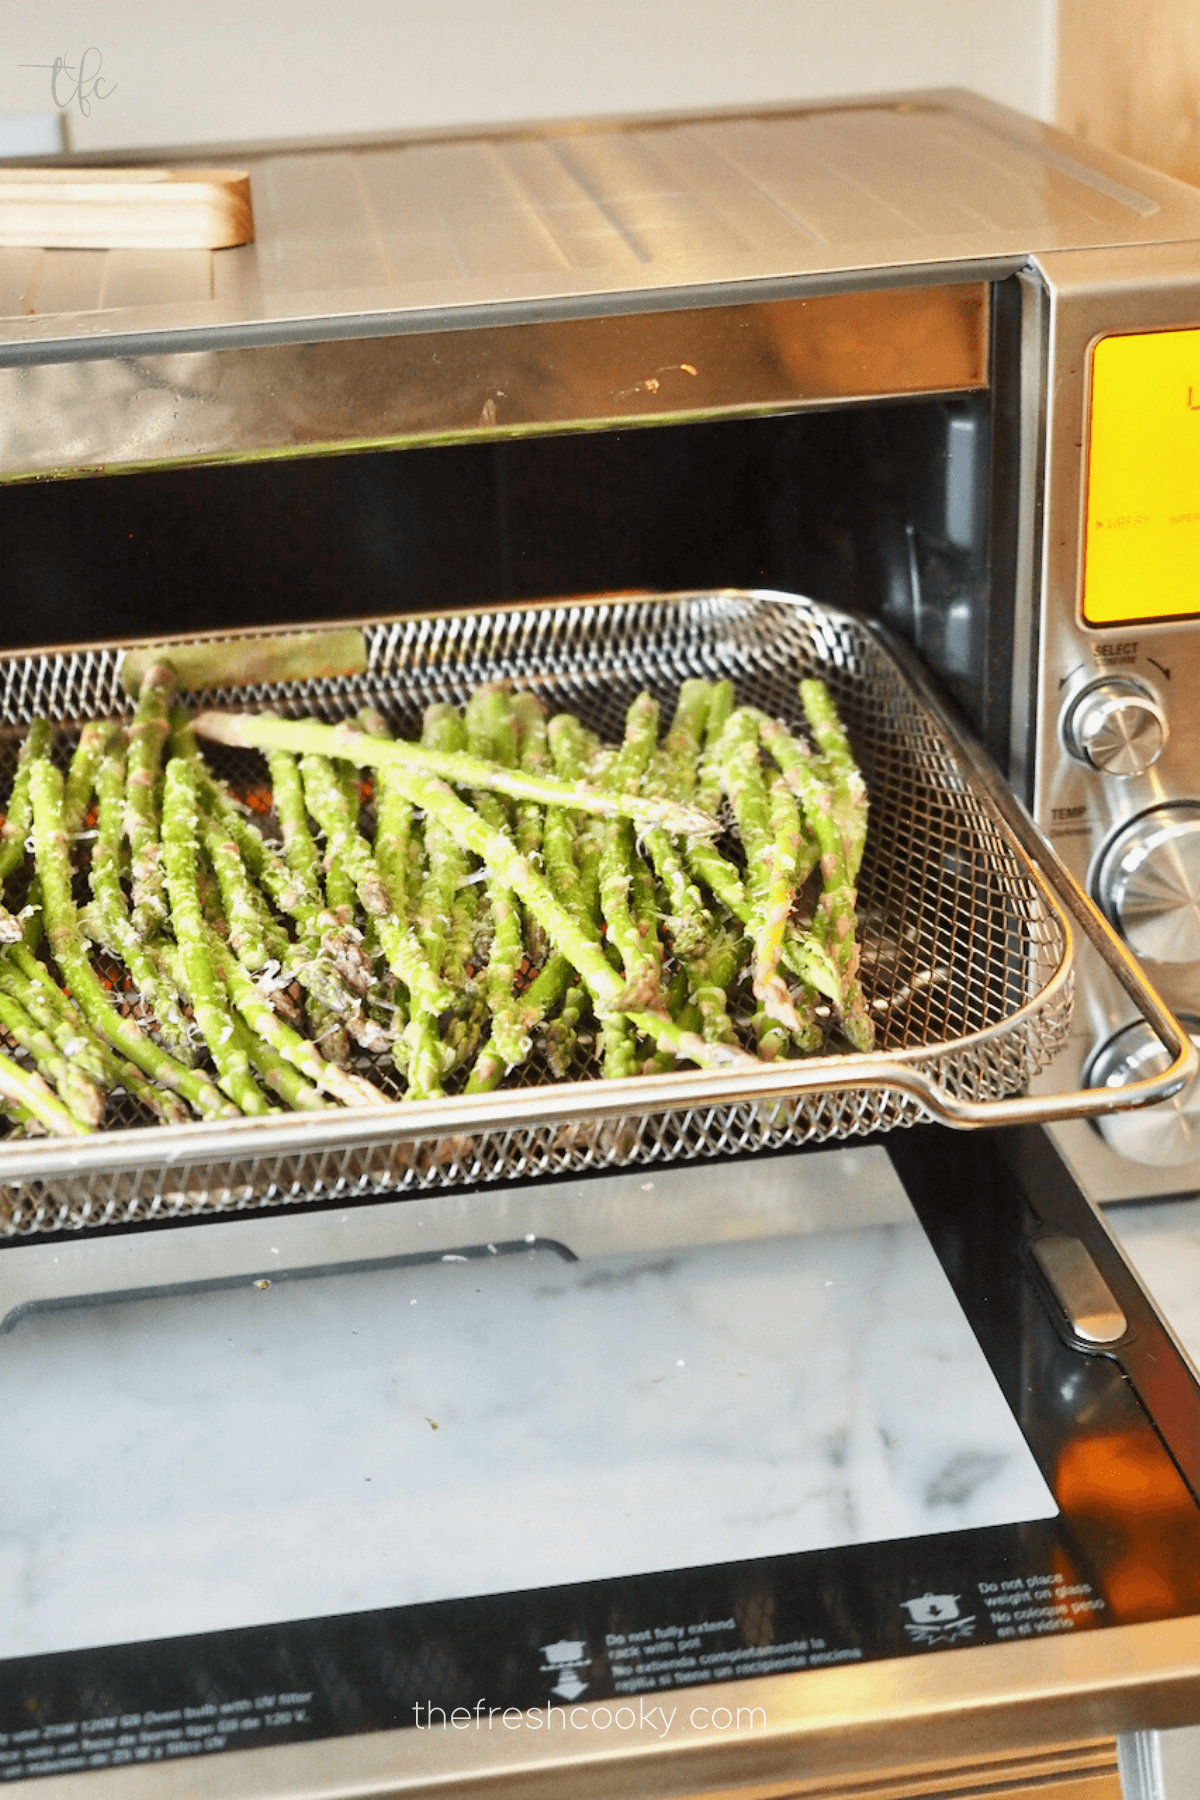 Asparagus in air fryer basket ready to roast.